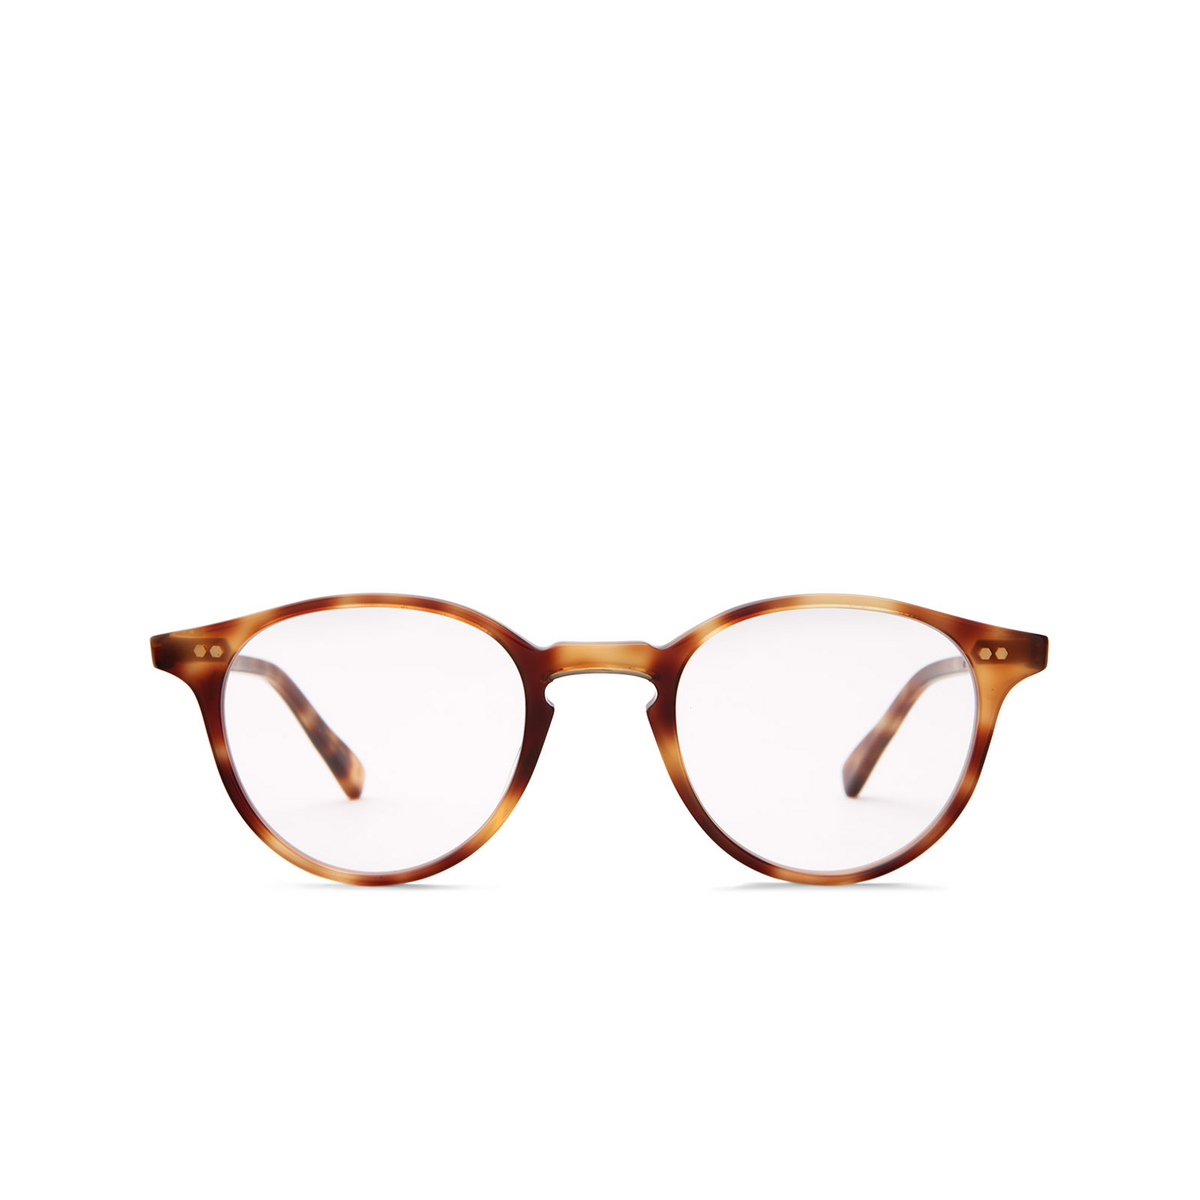 Mr. Leight MARMONT C Eyeglasses CALT-12KG Calico Tortoise-12K White Gold - front view